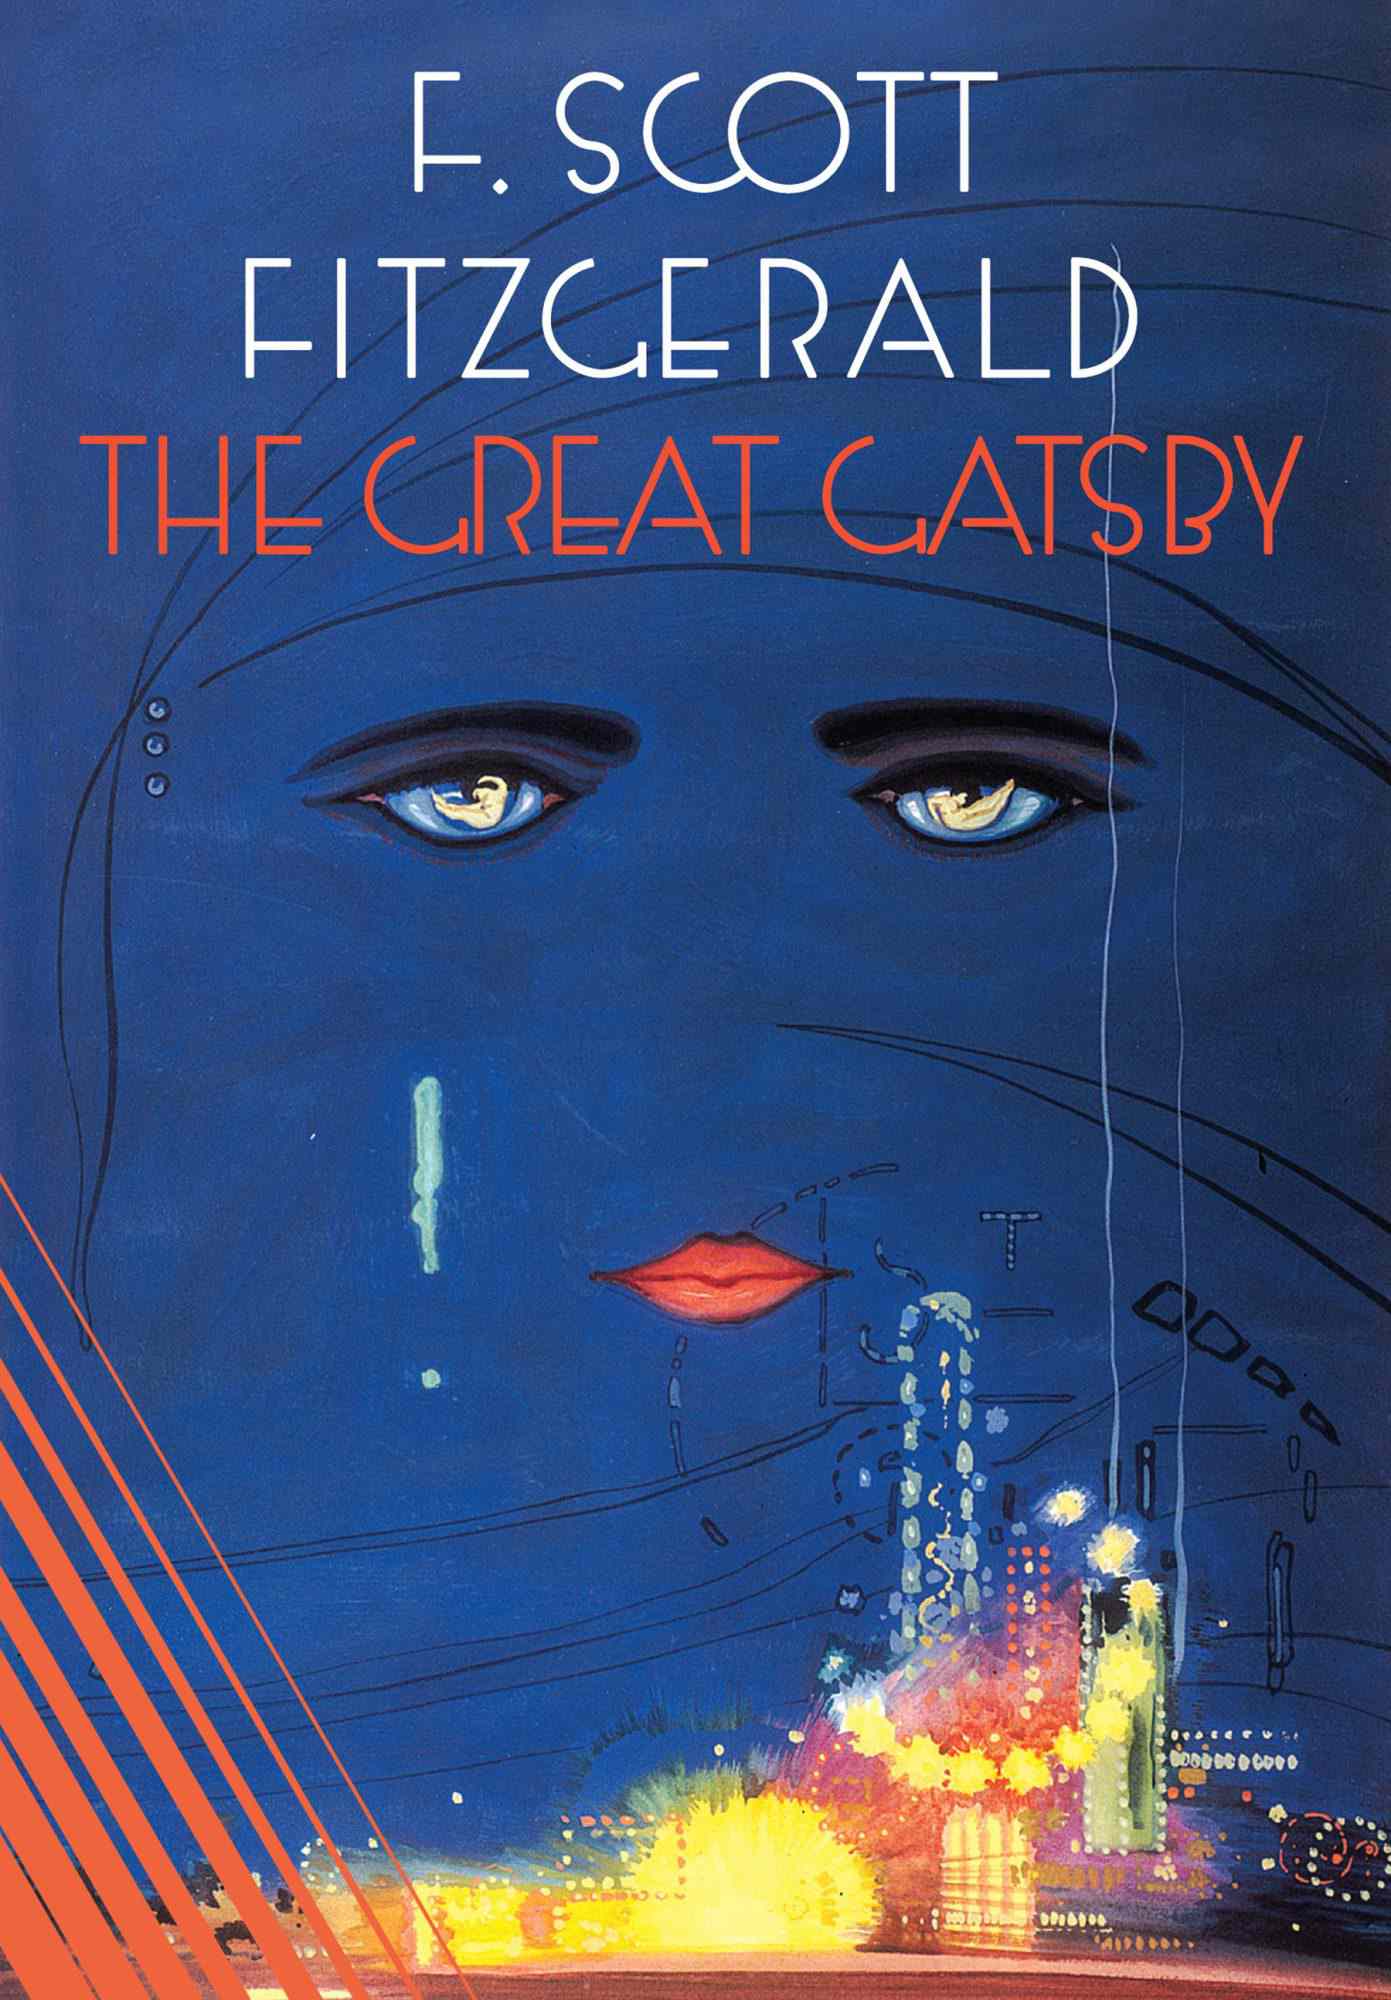 The Great Gatsby&nbsp;by F. Scott Fitzgerald